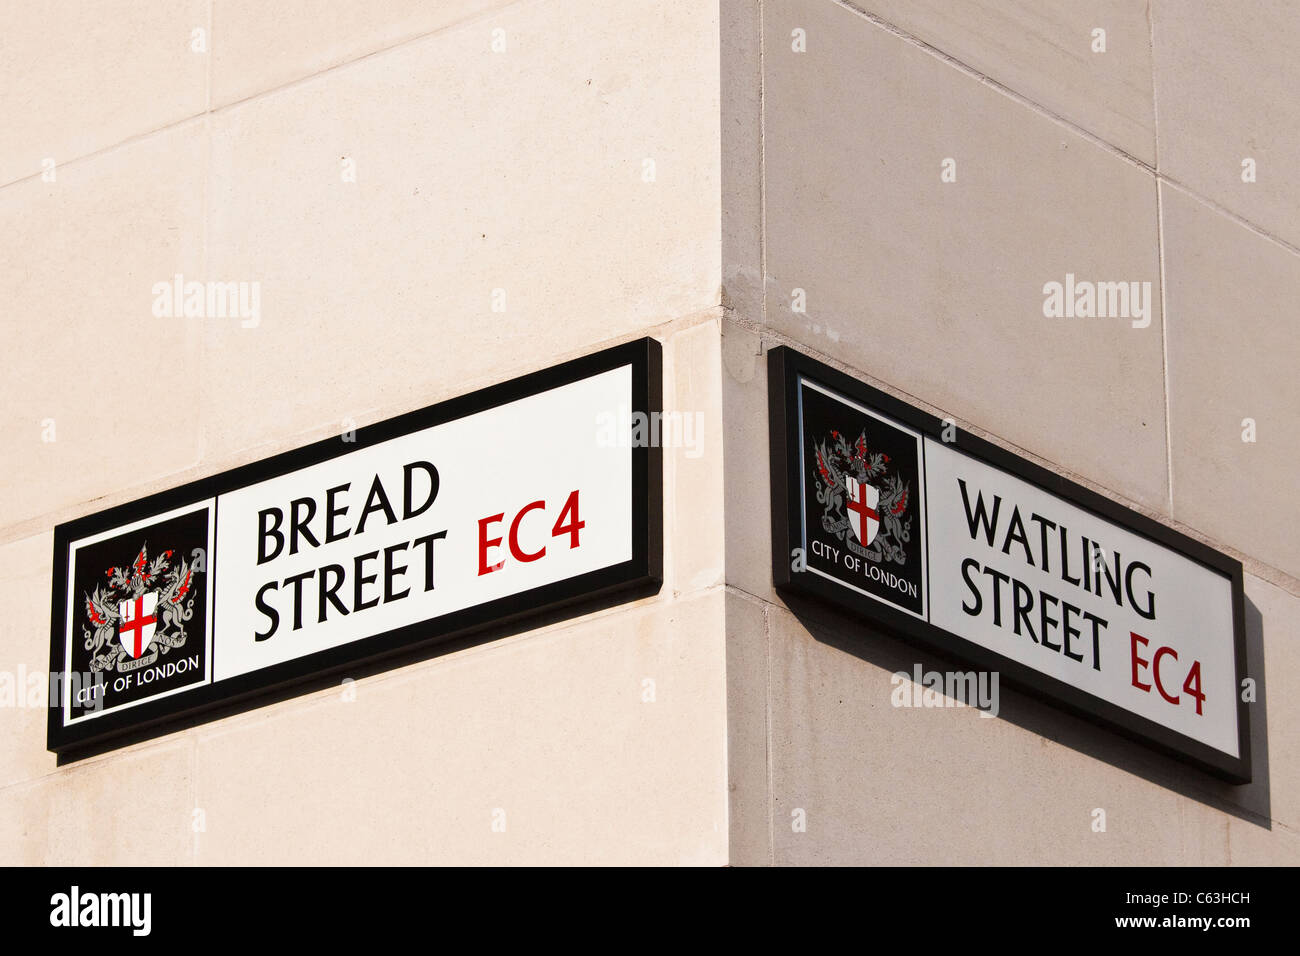 Watling Street & Bread street CE4 strada segno Foto Stock